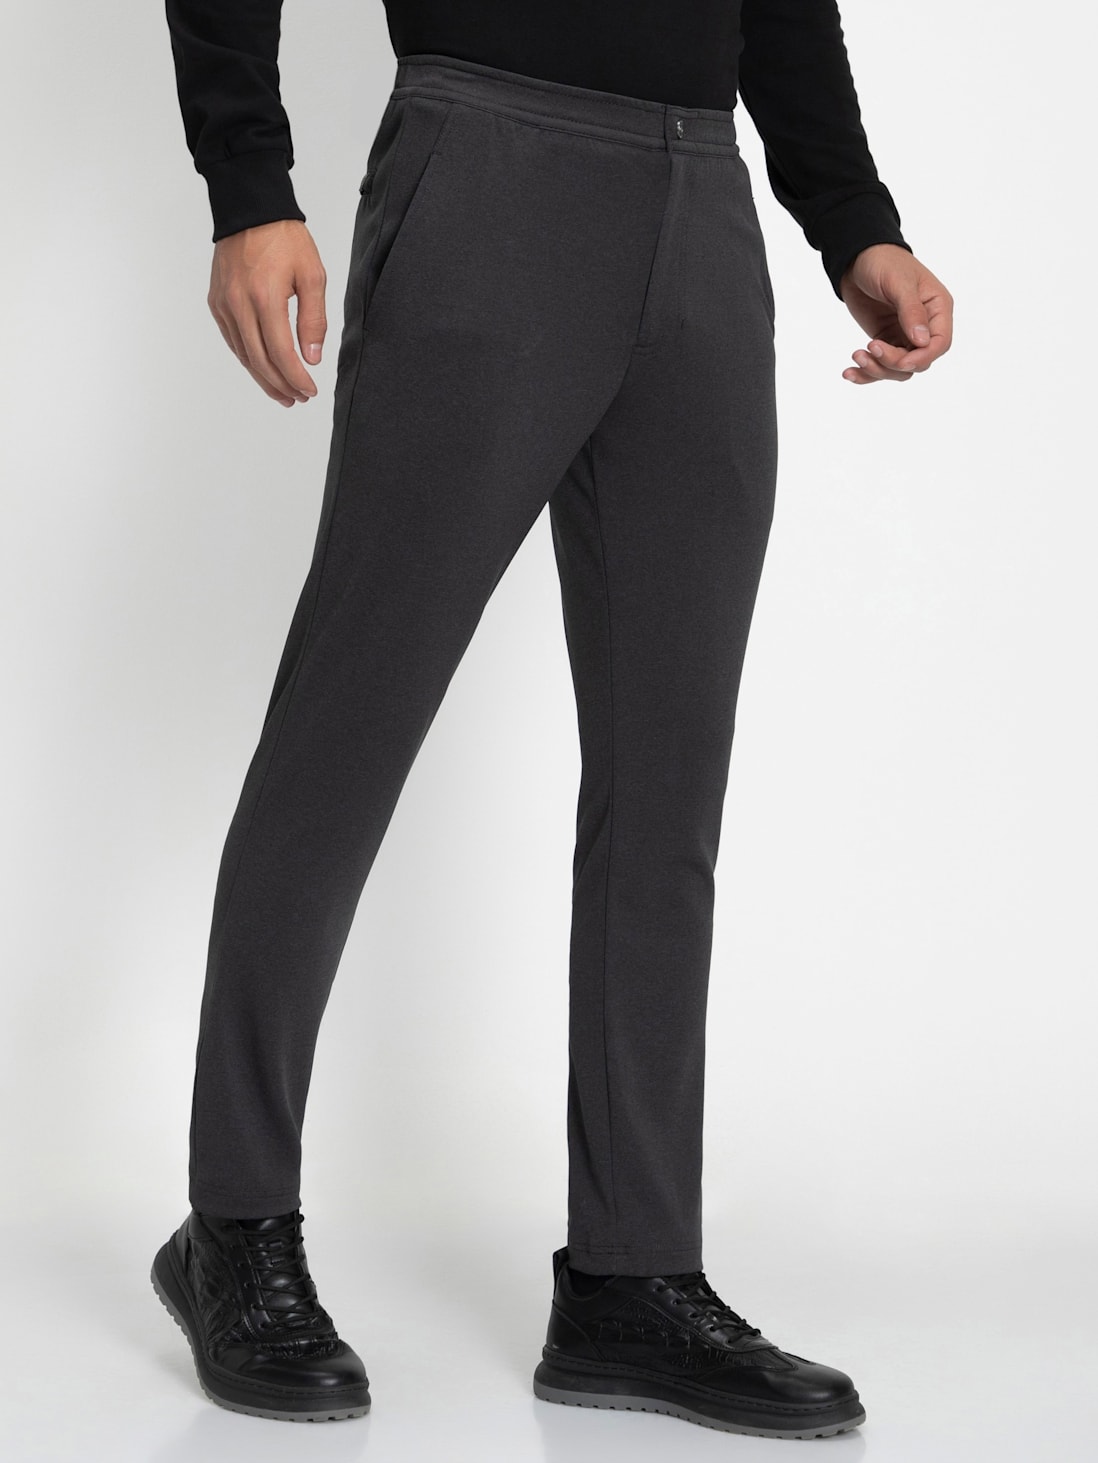 Buy Grey Track Pants for Women by JOCKEY Online  Ajiocom